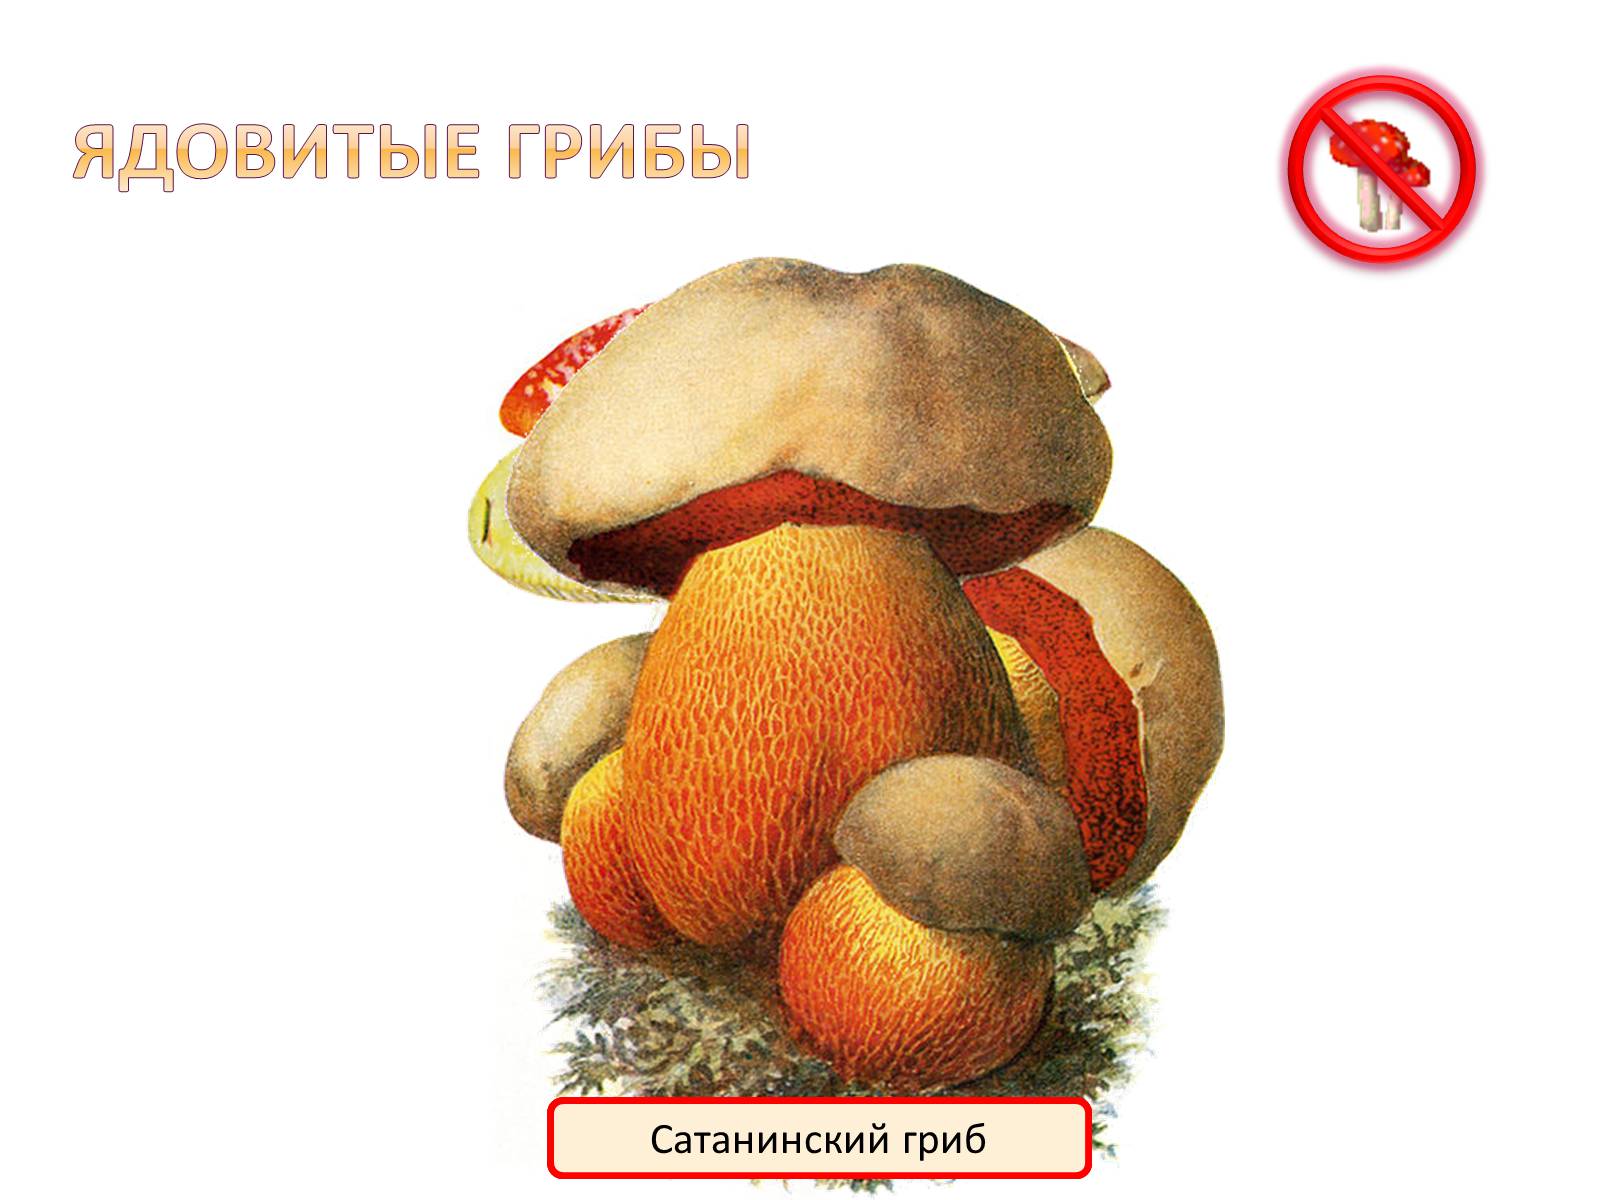 Презентація на тему «Шляпочные грибы» - Слайд #11